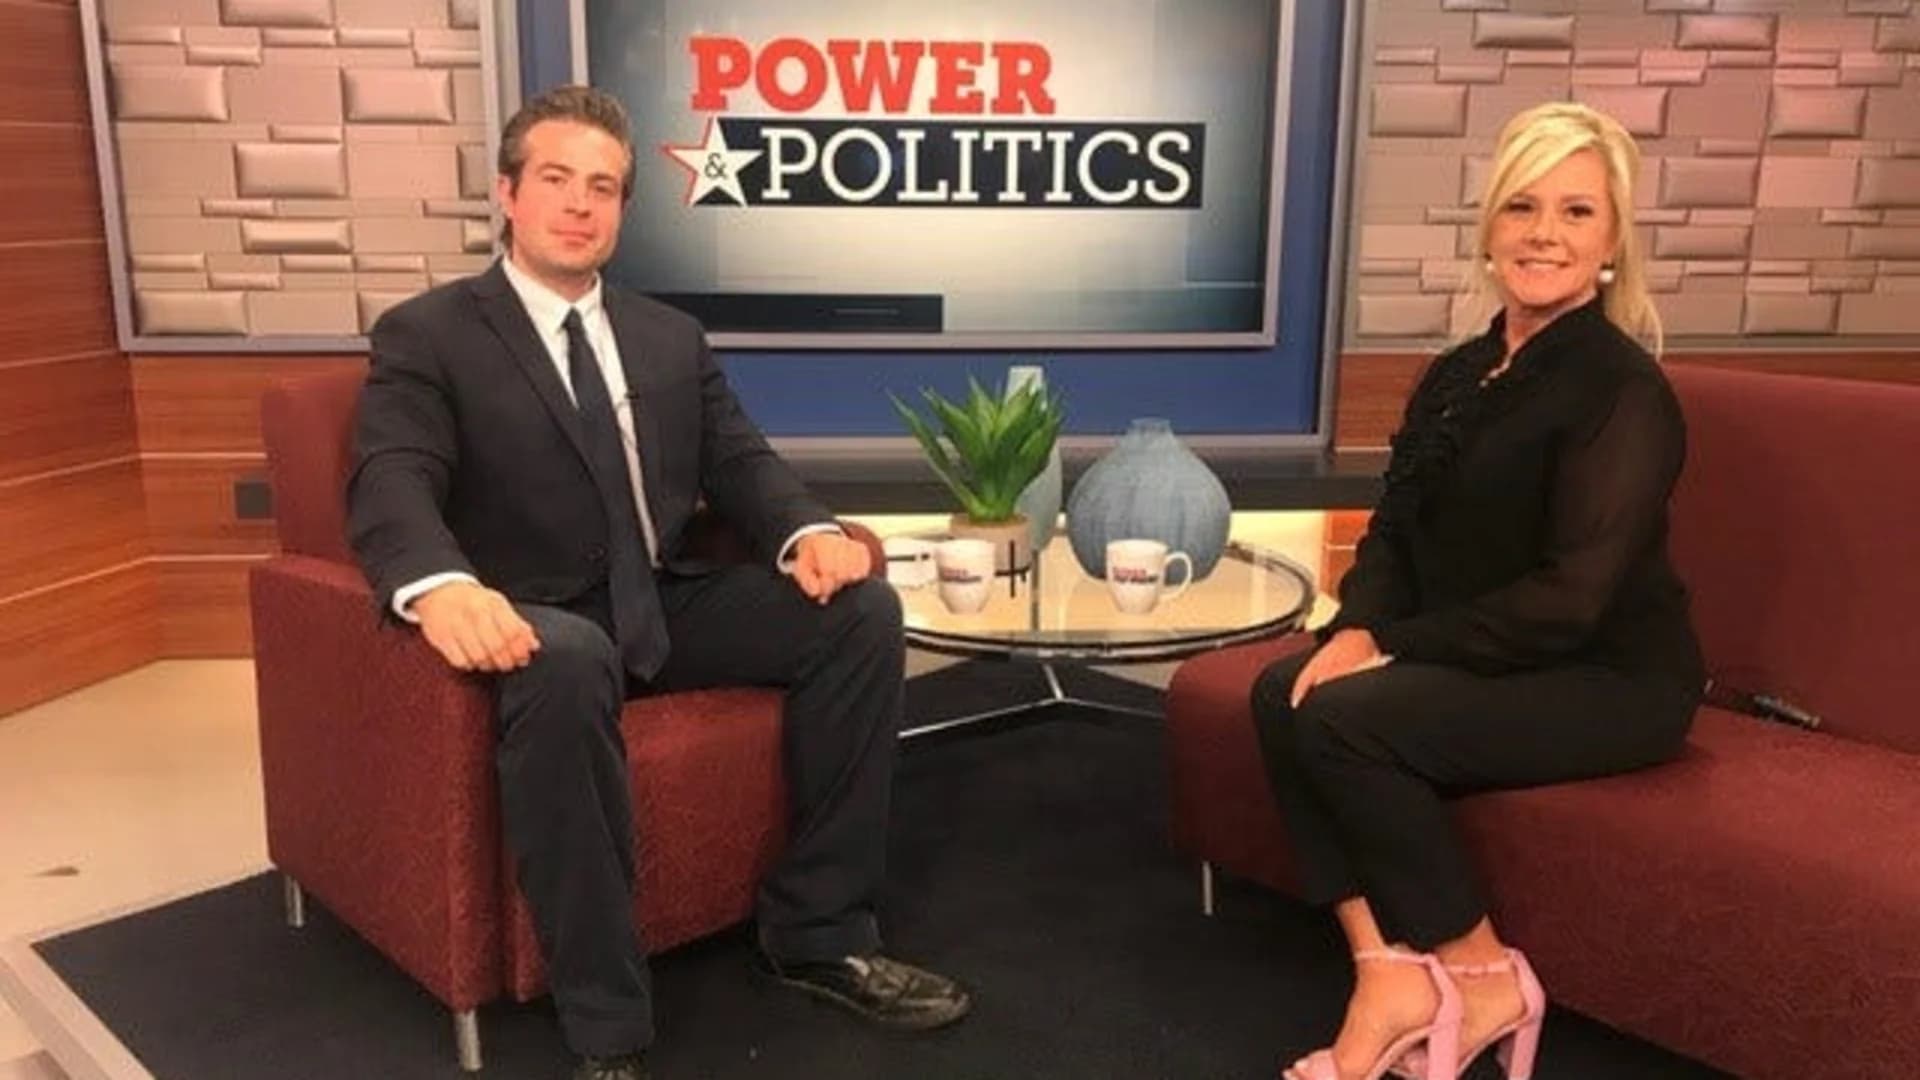 Power & Politics podcast: Murphy chief of staff and Bridget Kelly - listen here